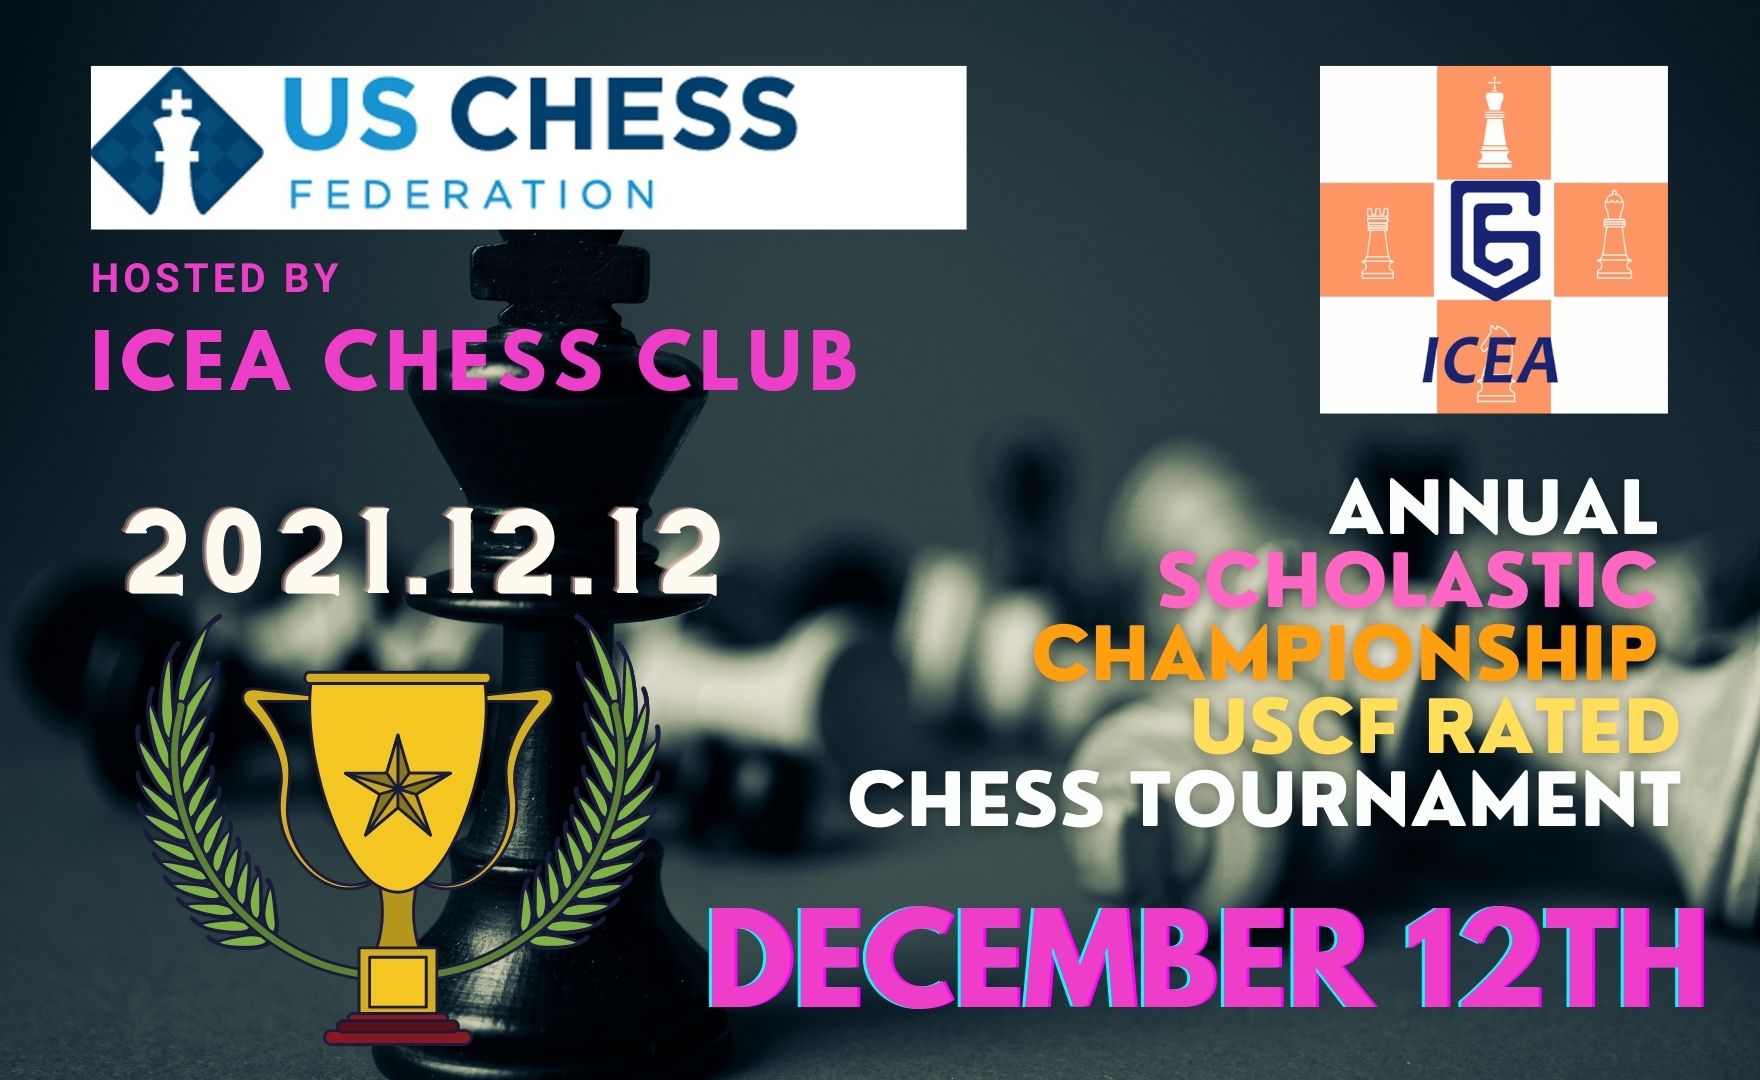 ICEA 2021 Annual Scholastic Championship Chess Tournament